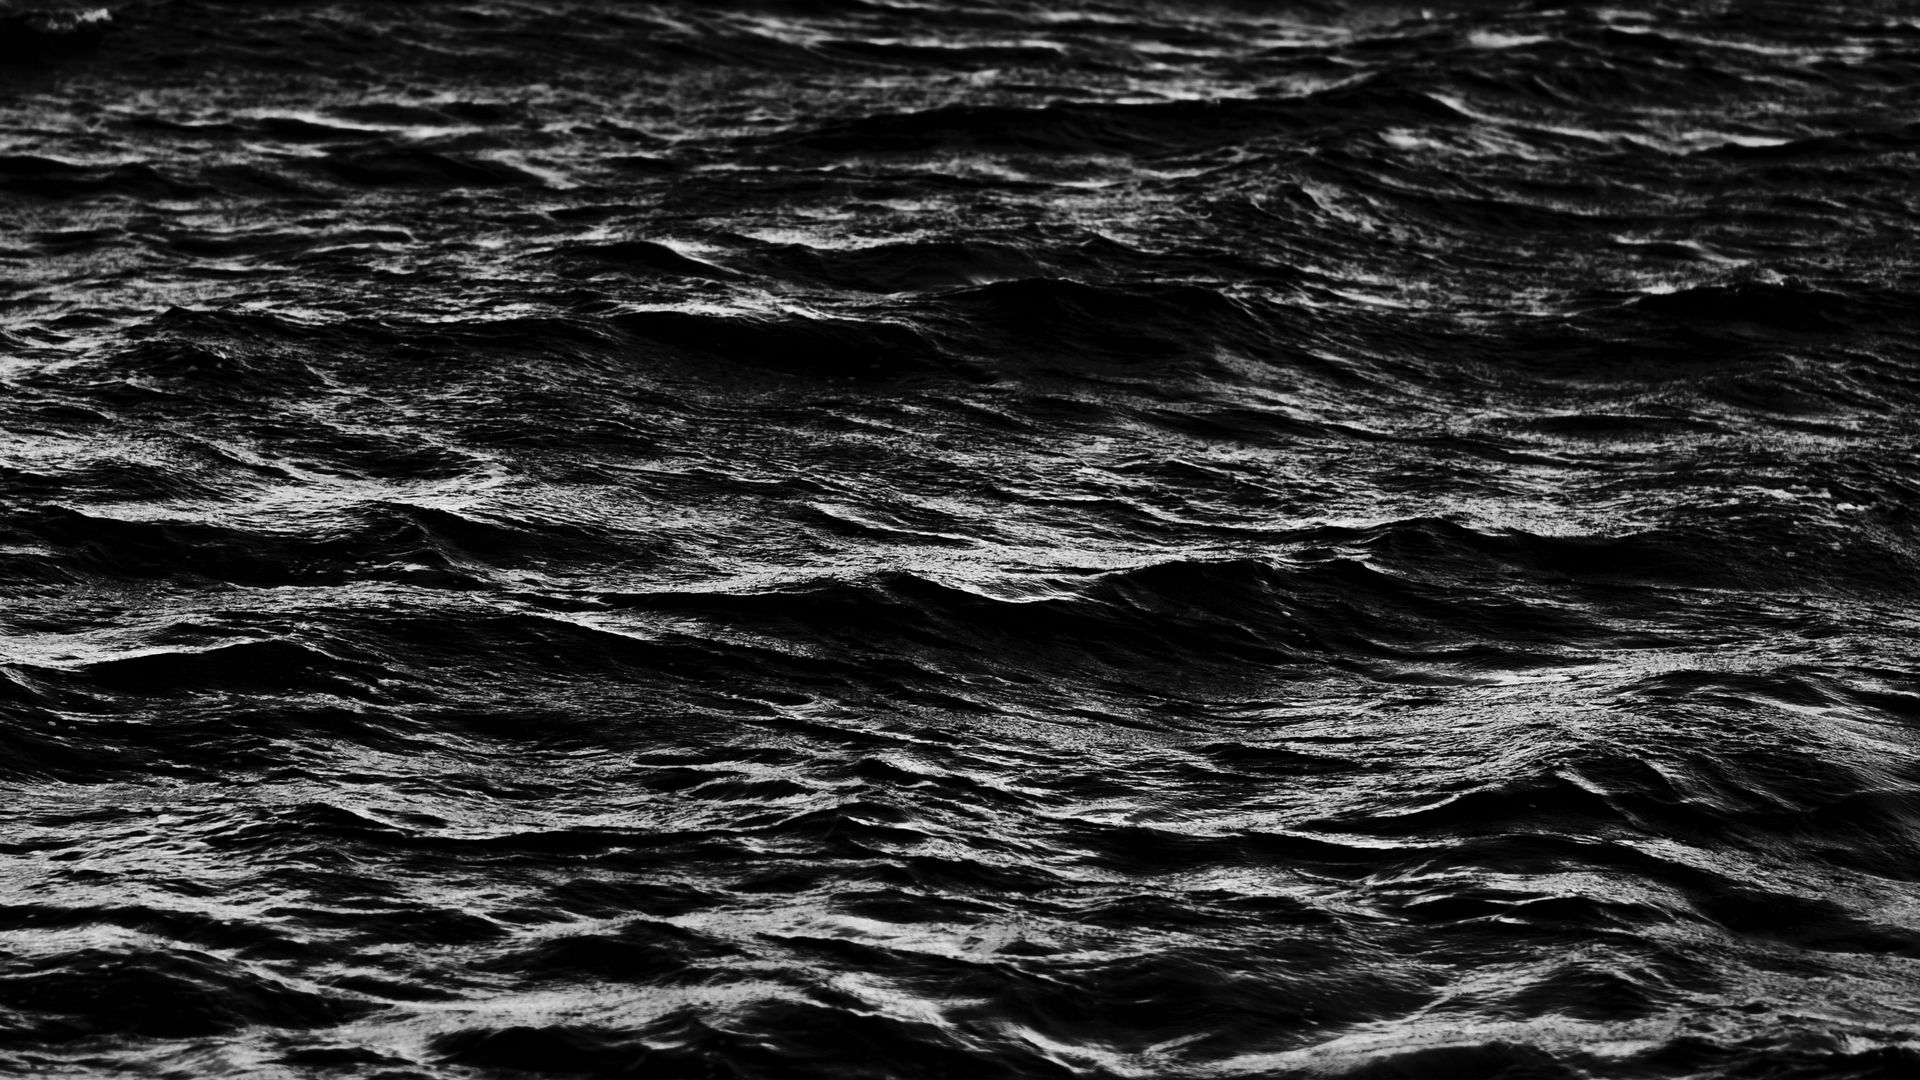 Download wallpaper 1920x1080 waves, water, black full hd, hdtv, fhd